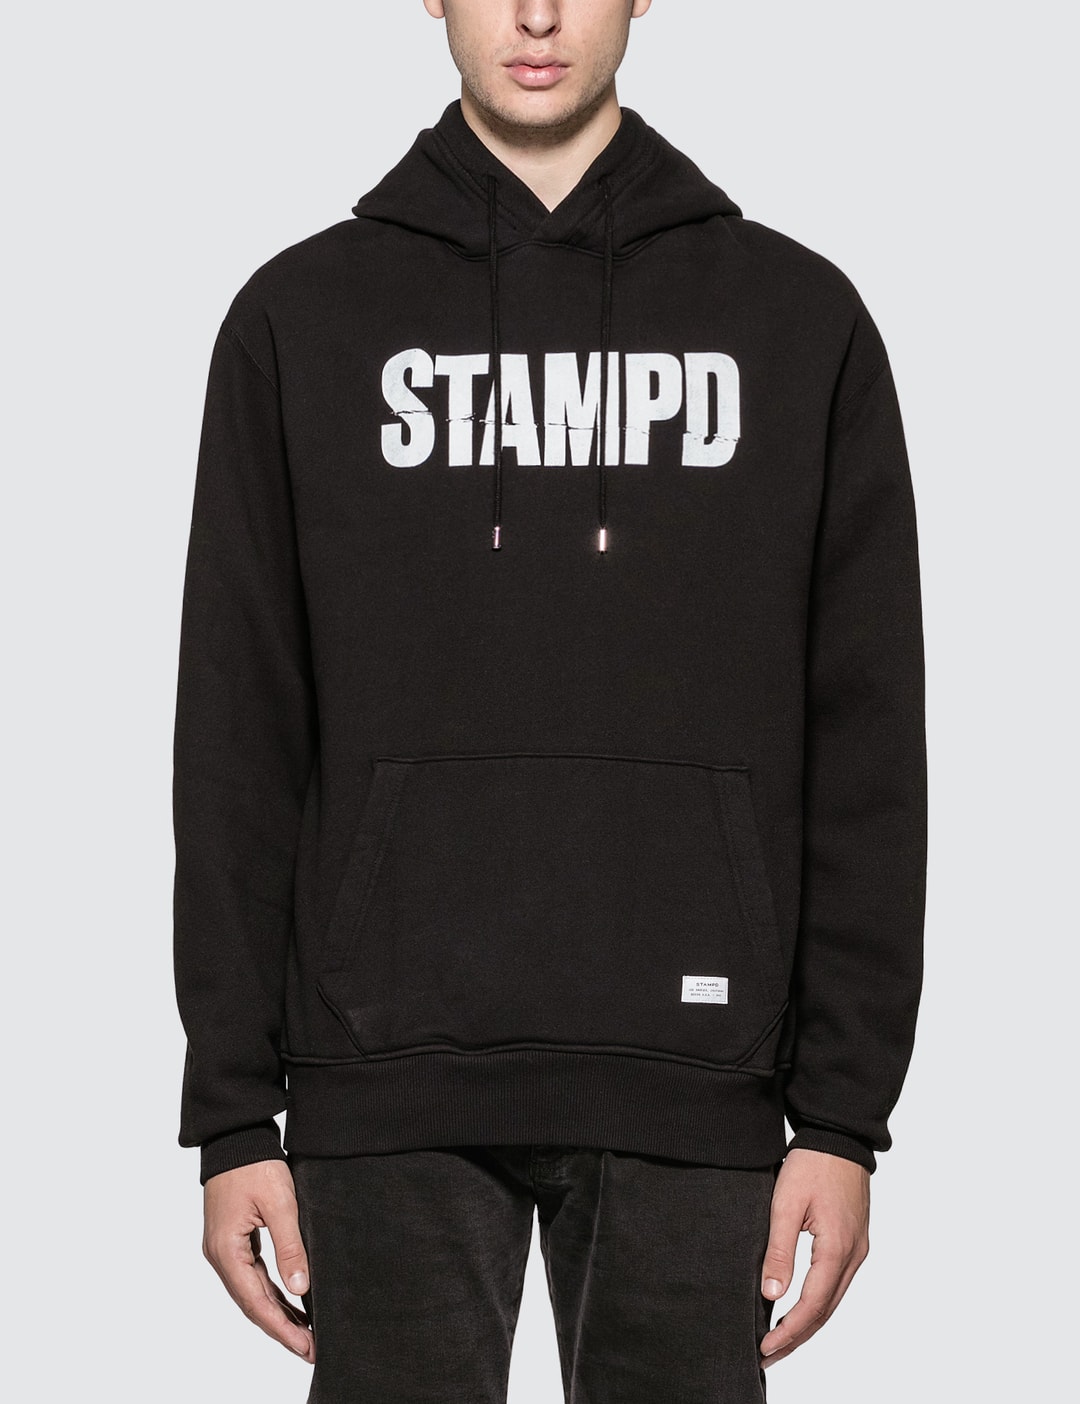 Stampd - Split Hoody | HBX - ハイプビースト(Hypebeast)が厳選したグローバルファッション&ライフスタイル